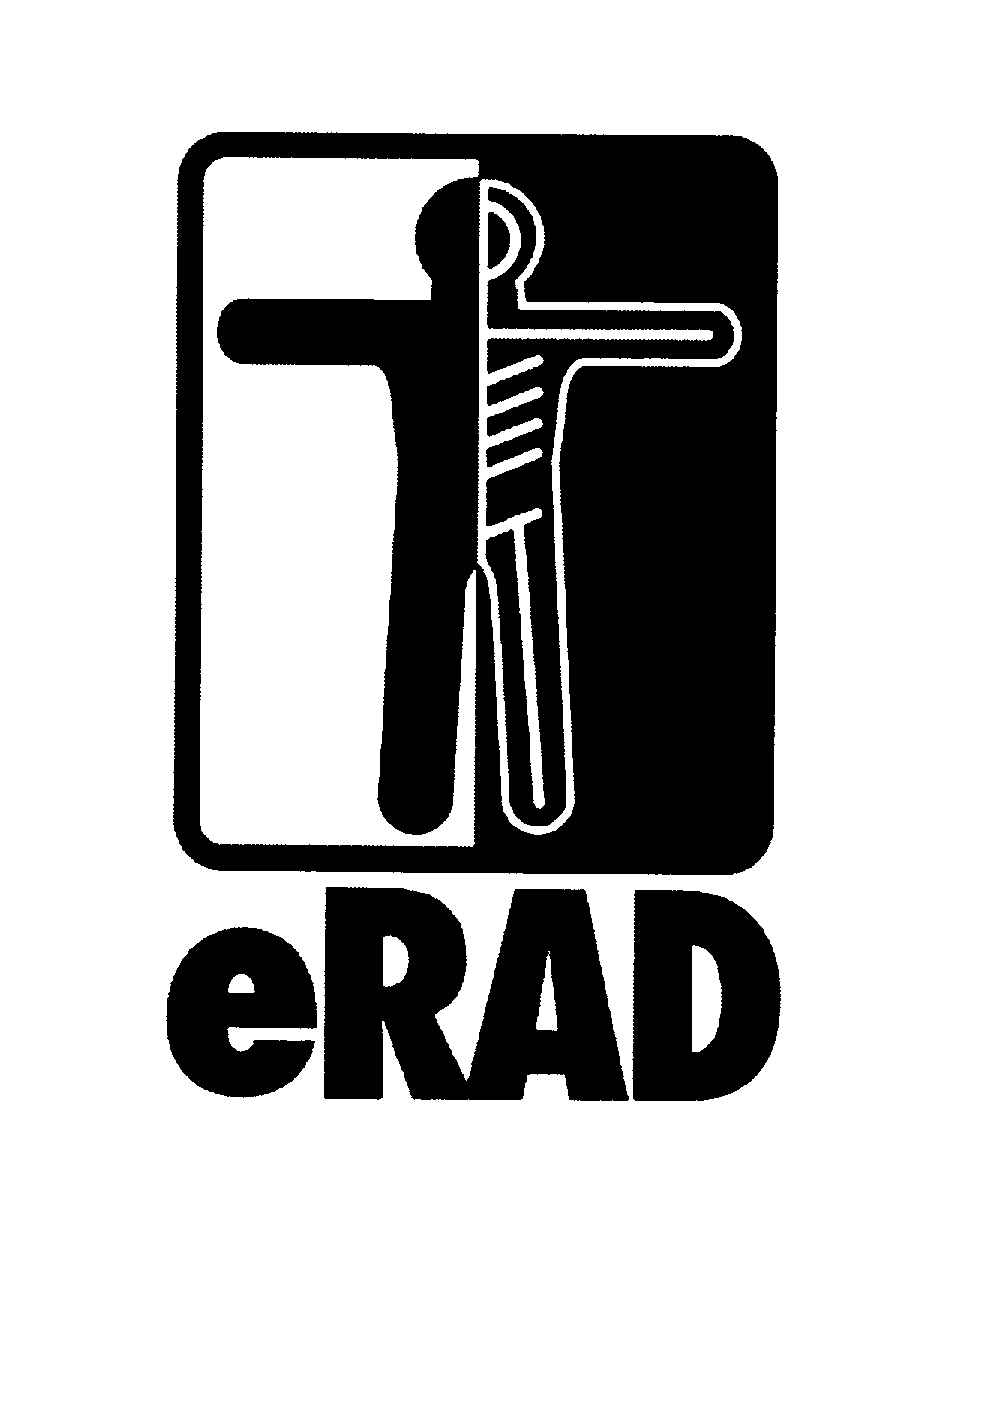 Trademark Logo ERAD